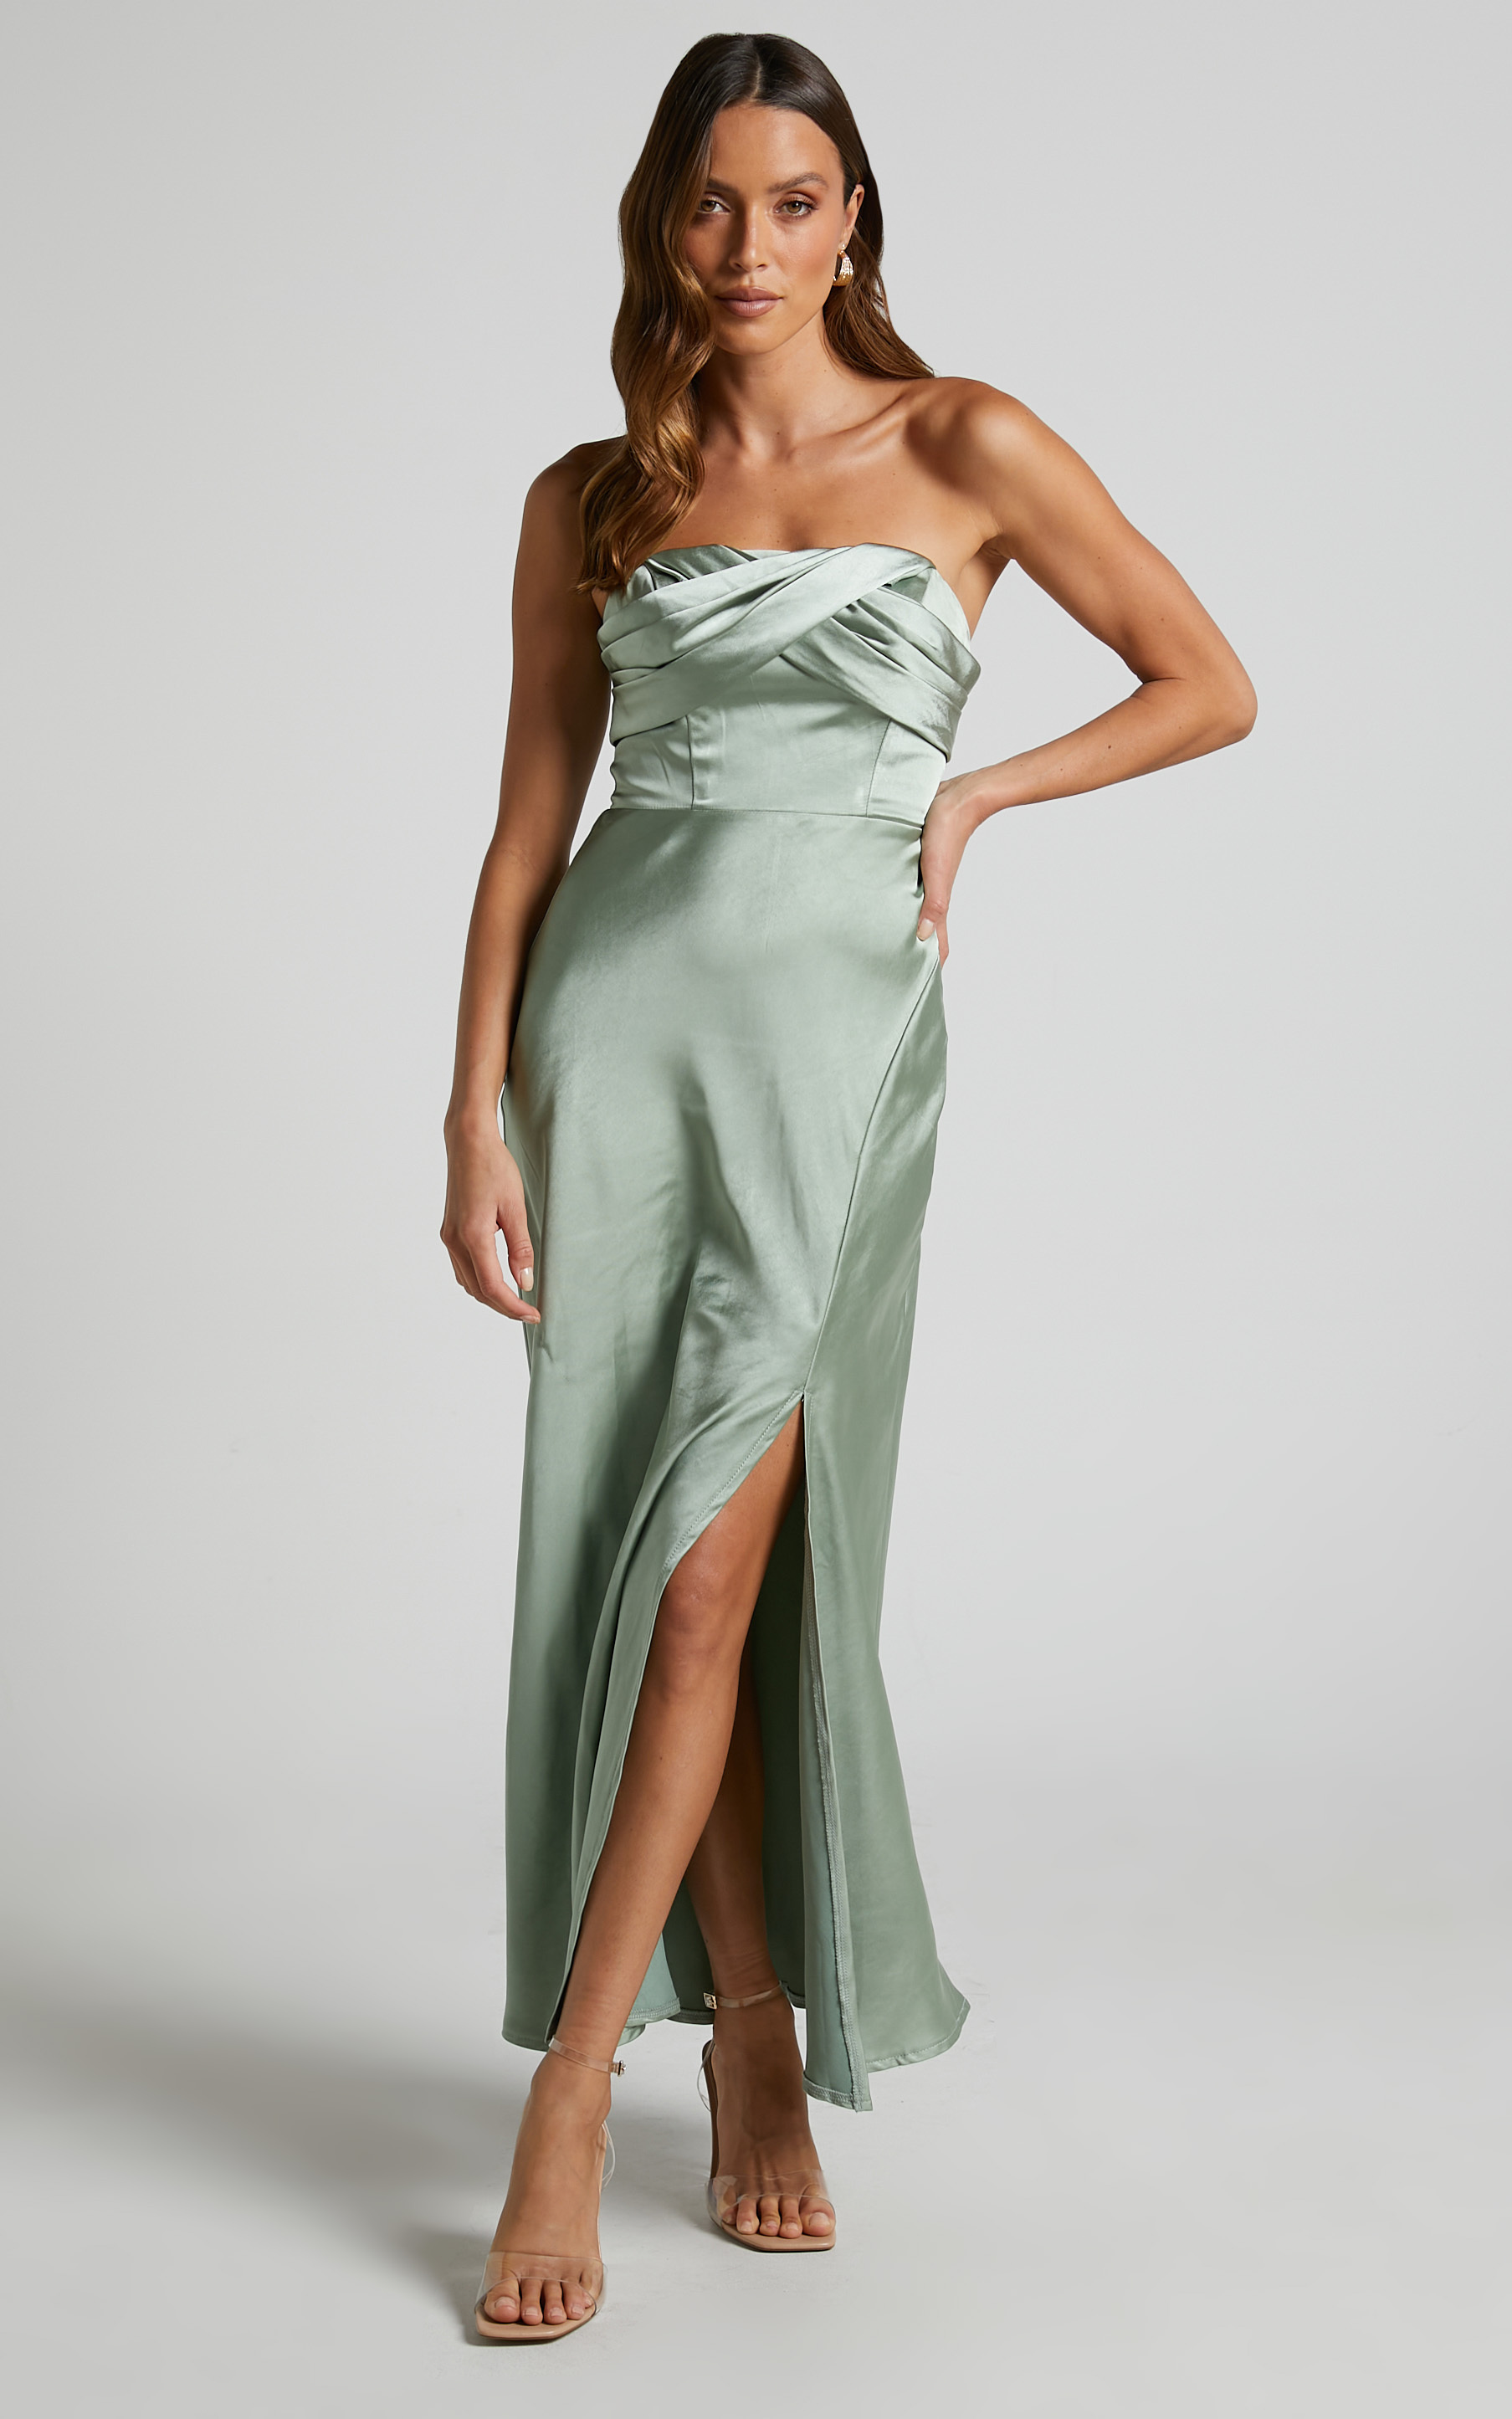 Karriel Maxi Dress - Strapless Satin Maxi Dress in Sage Green | Showpo USA